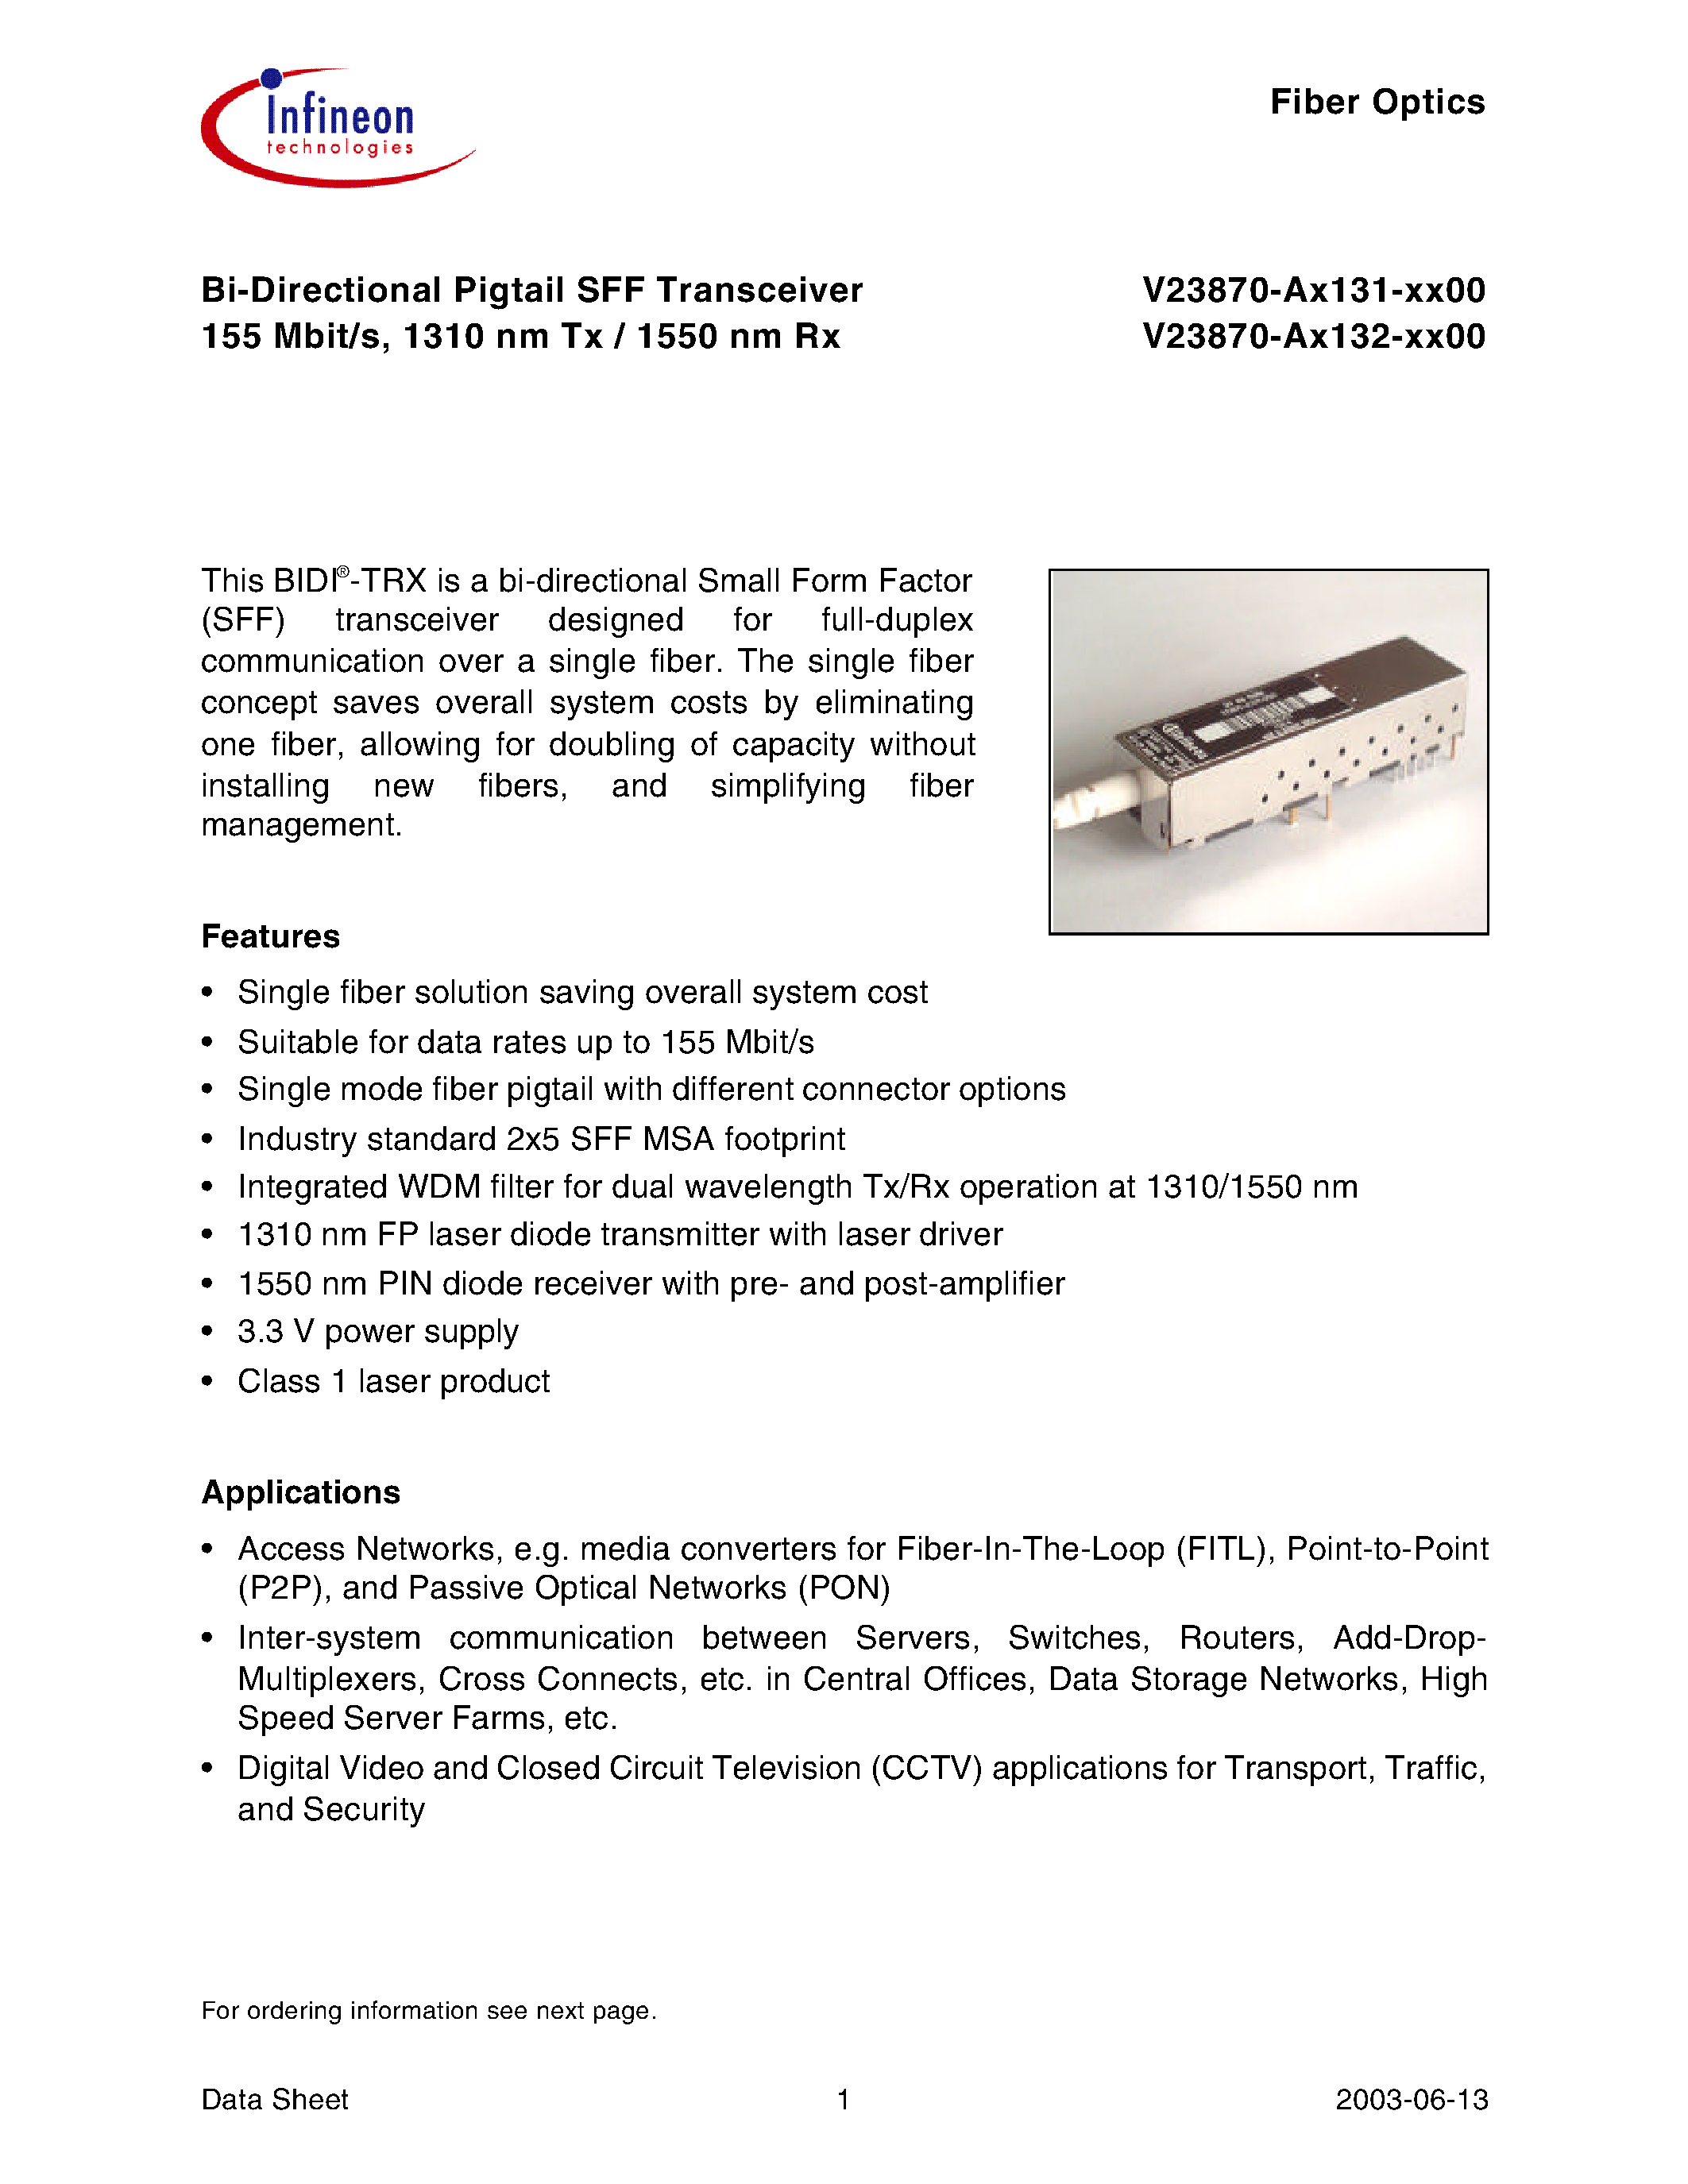 Даташит V23870-A3132-F200 - Bi-Directional Pigtail SFF Transceiver 155 Mbit/s/ 1310 nm Tx / 1550 nm Rx страница 1